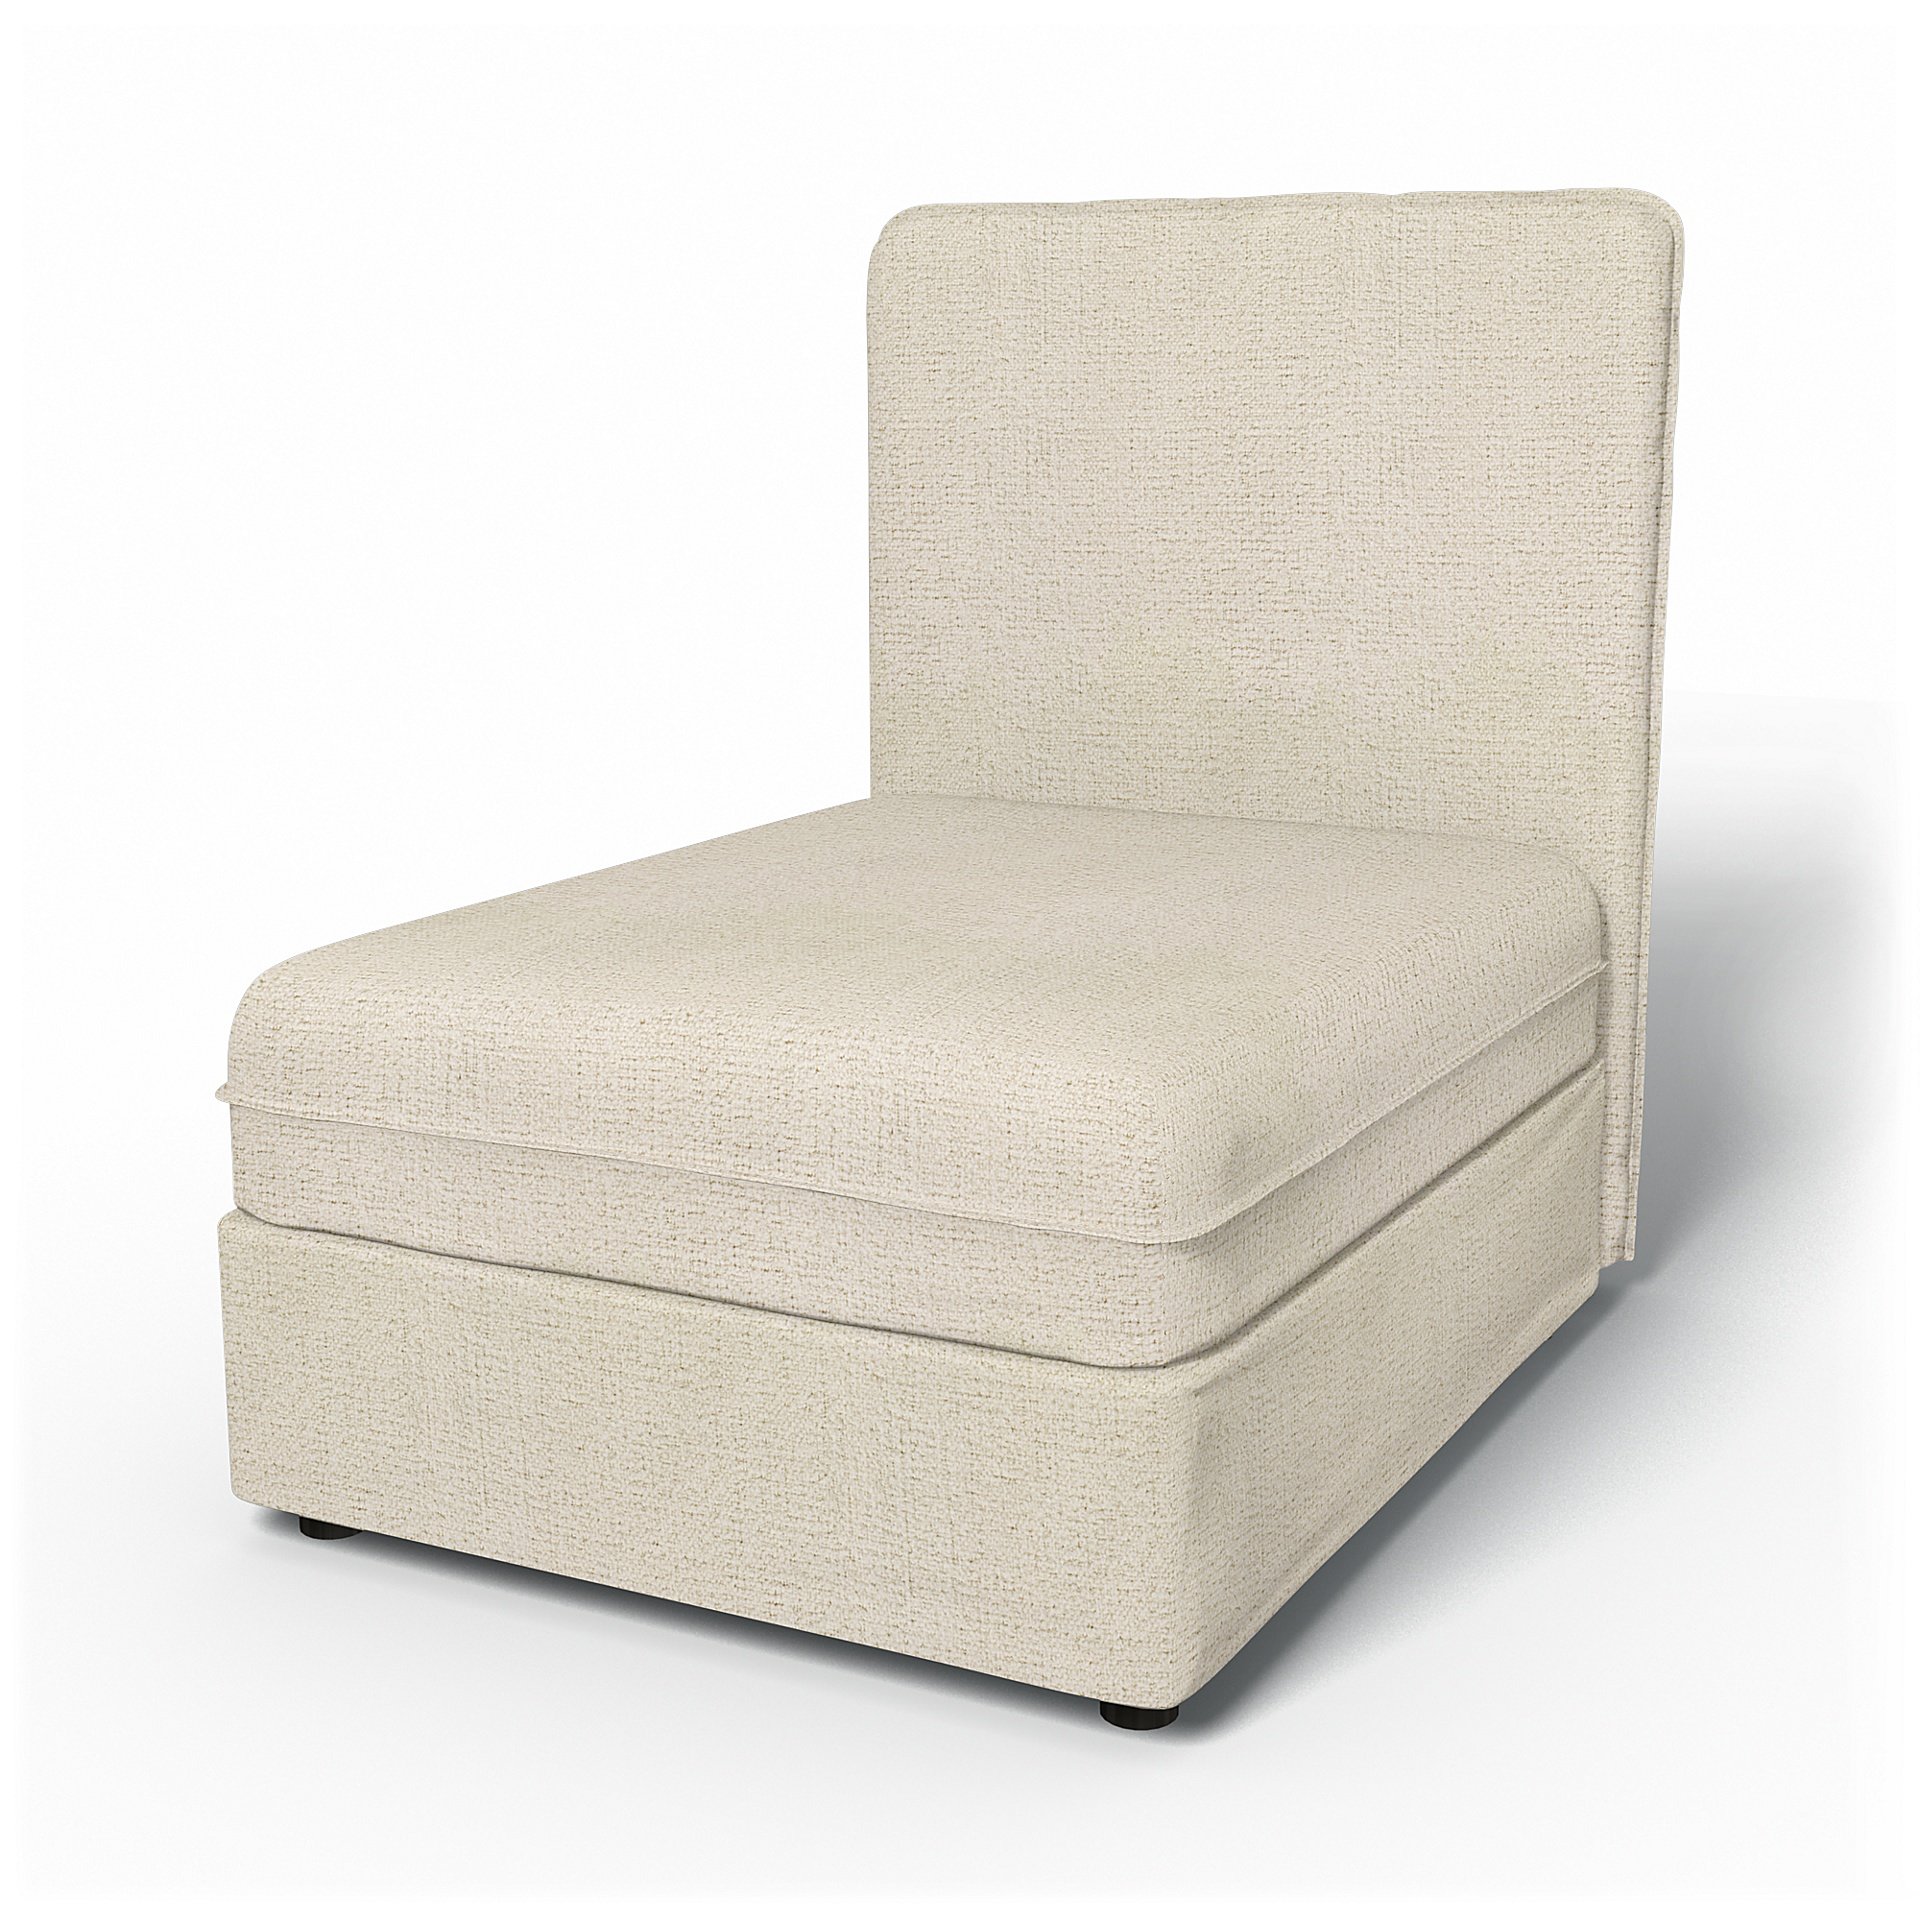 IKEA - Vallentuna Seat Module with High Back Cover 80x100cm 32x32in, Ecru, Boucle & Texture - Bemz